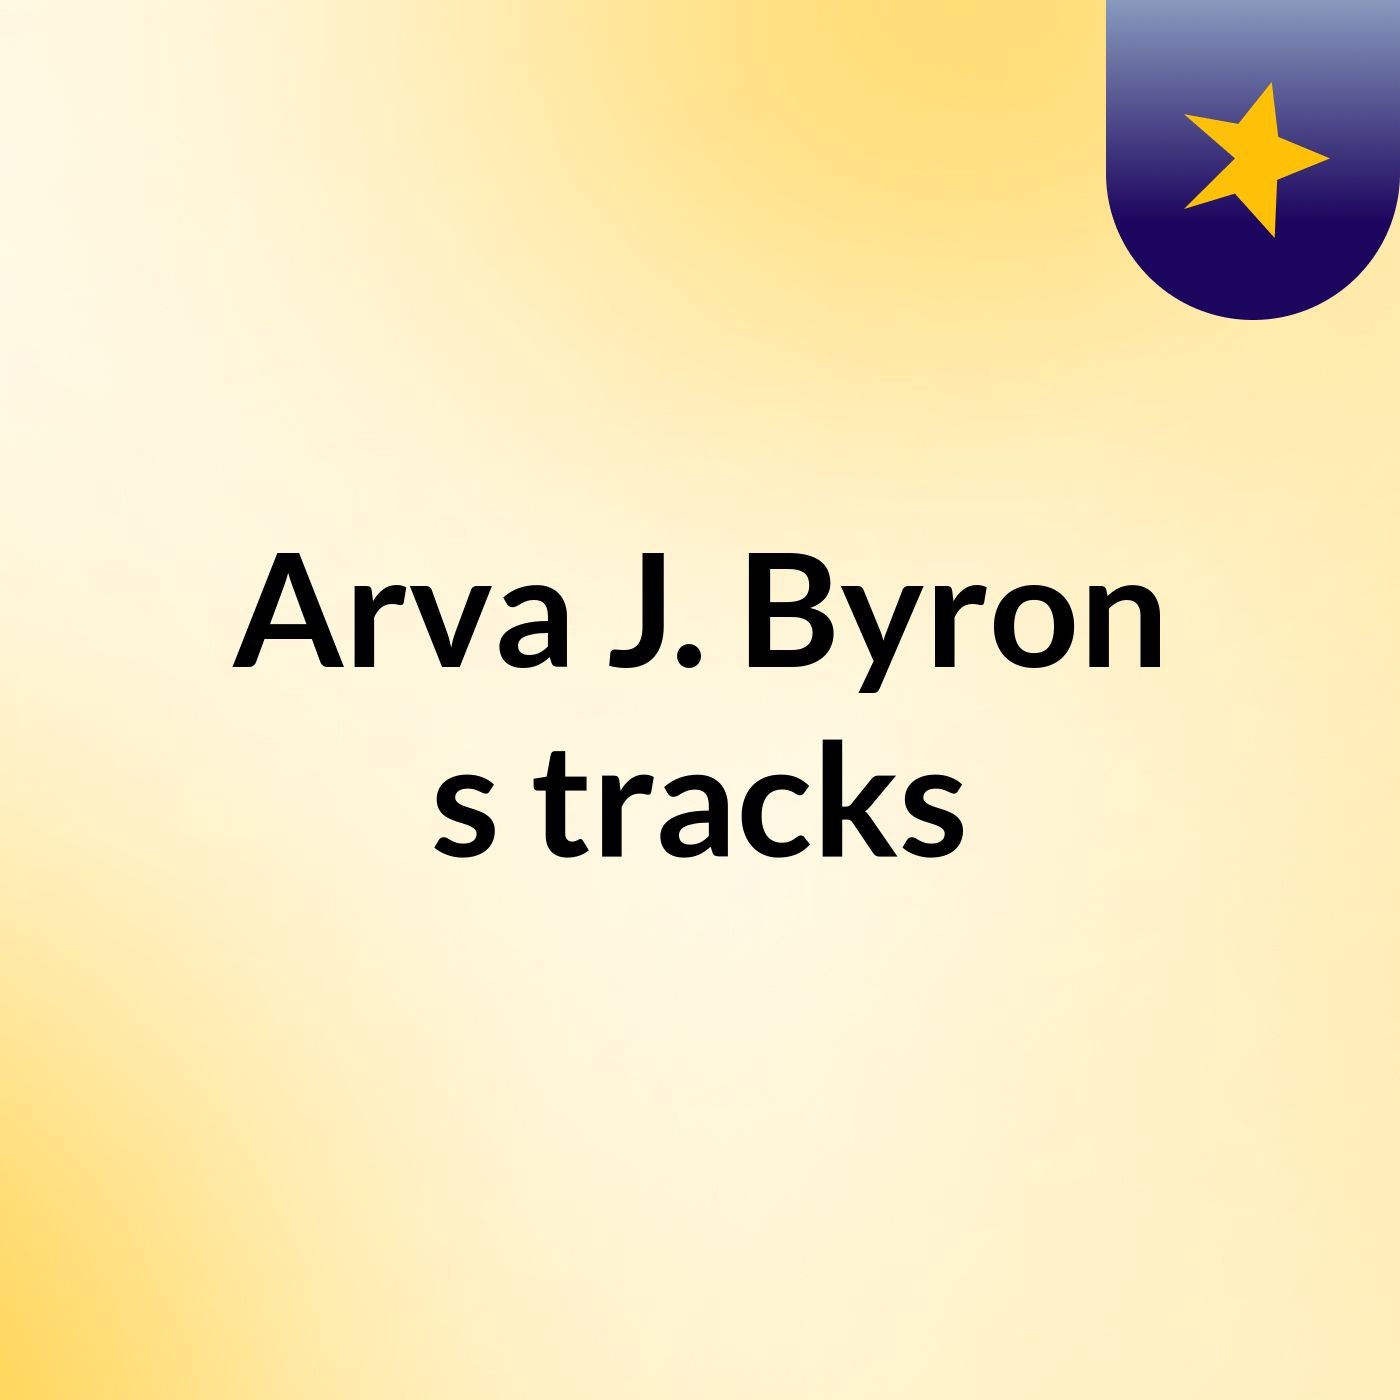 Arva J. Byron's tracks